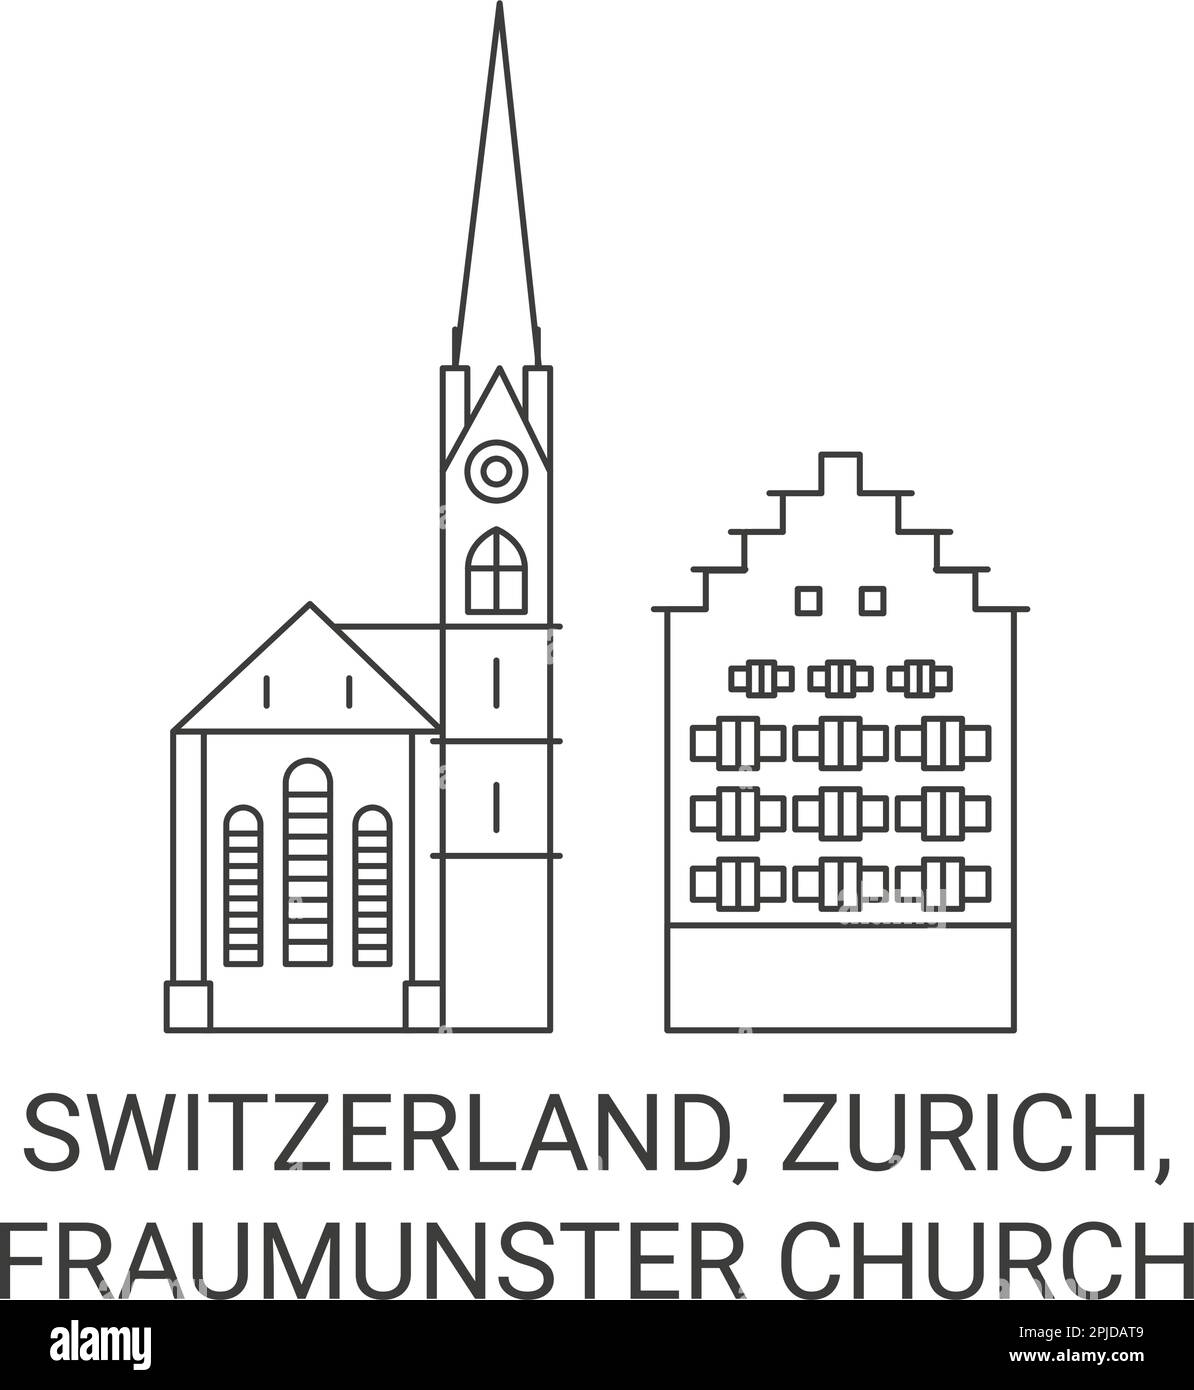 Switzerland, Zurich, Fraumunster Church travel landmark vector illustration Stock Vector